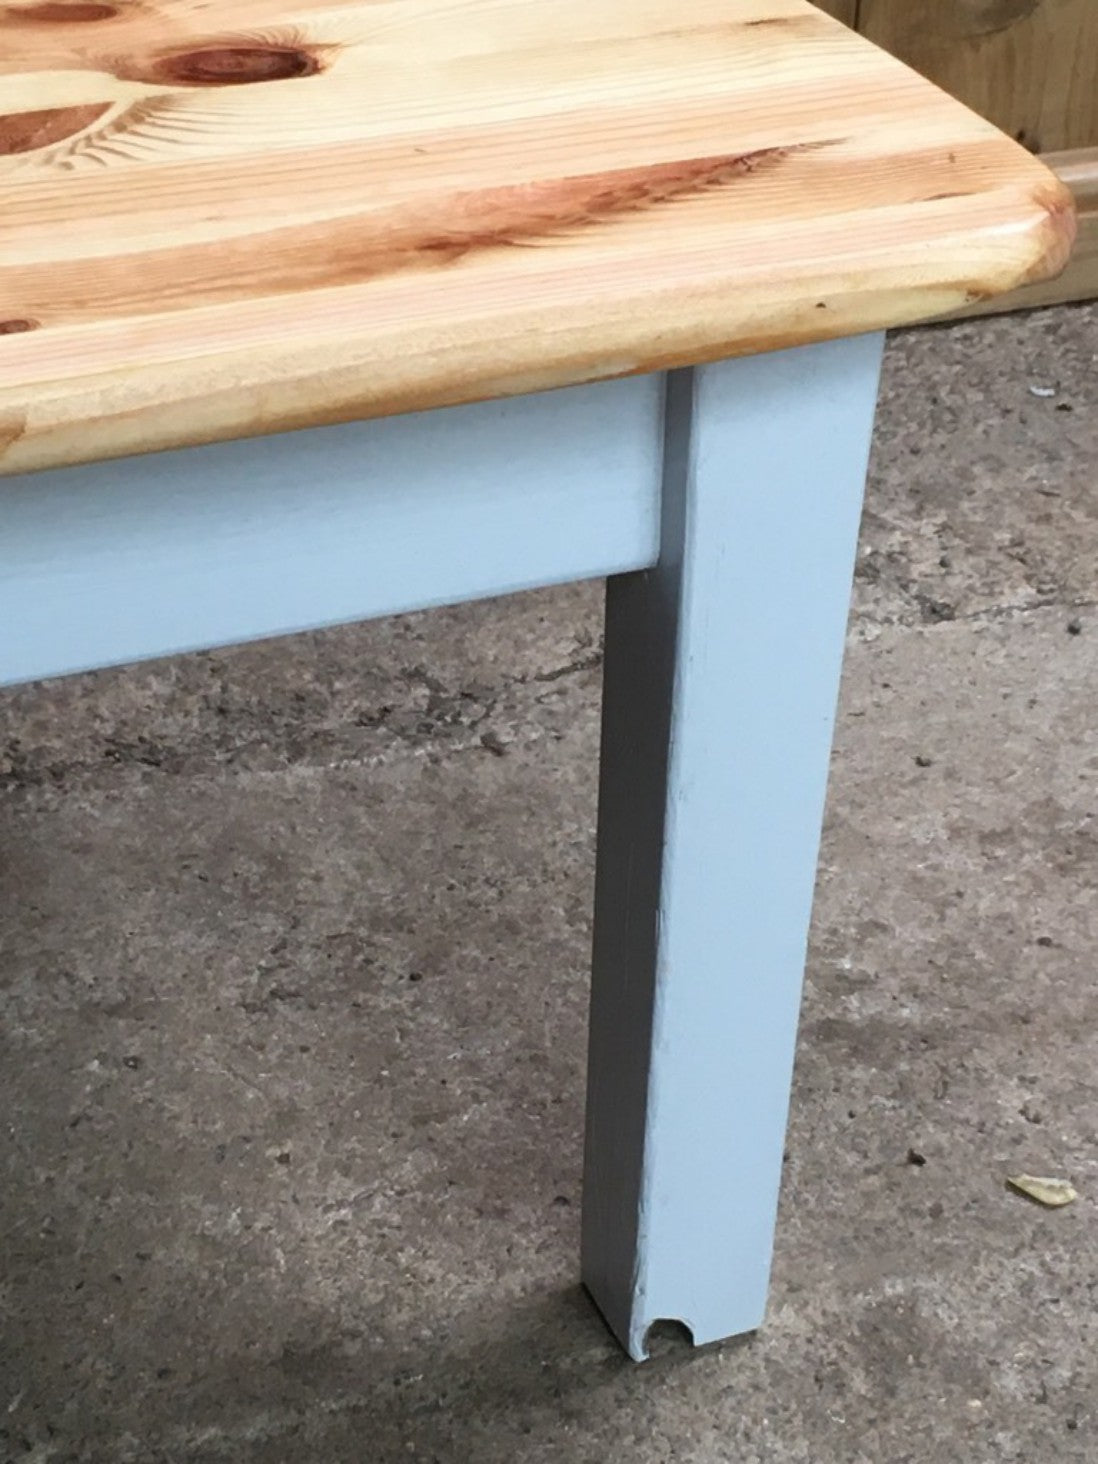 43 1/4” X 27 7/8” X 15 1/8” Useful Modern Painted Pine Coffee Table